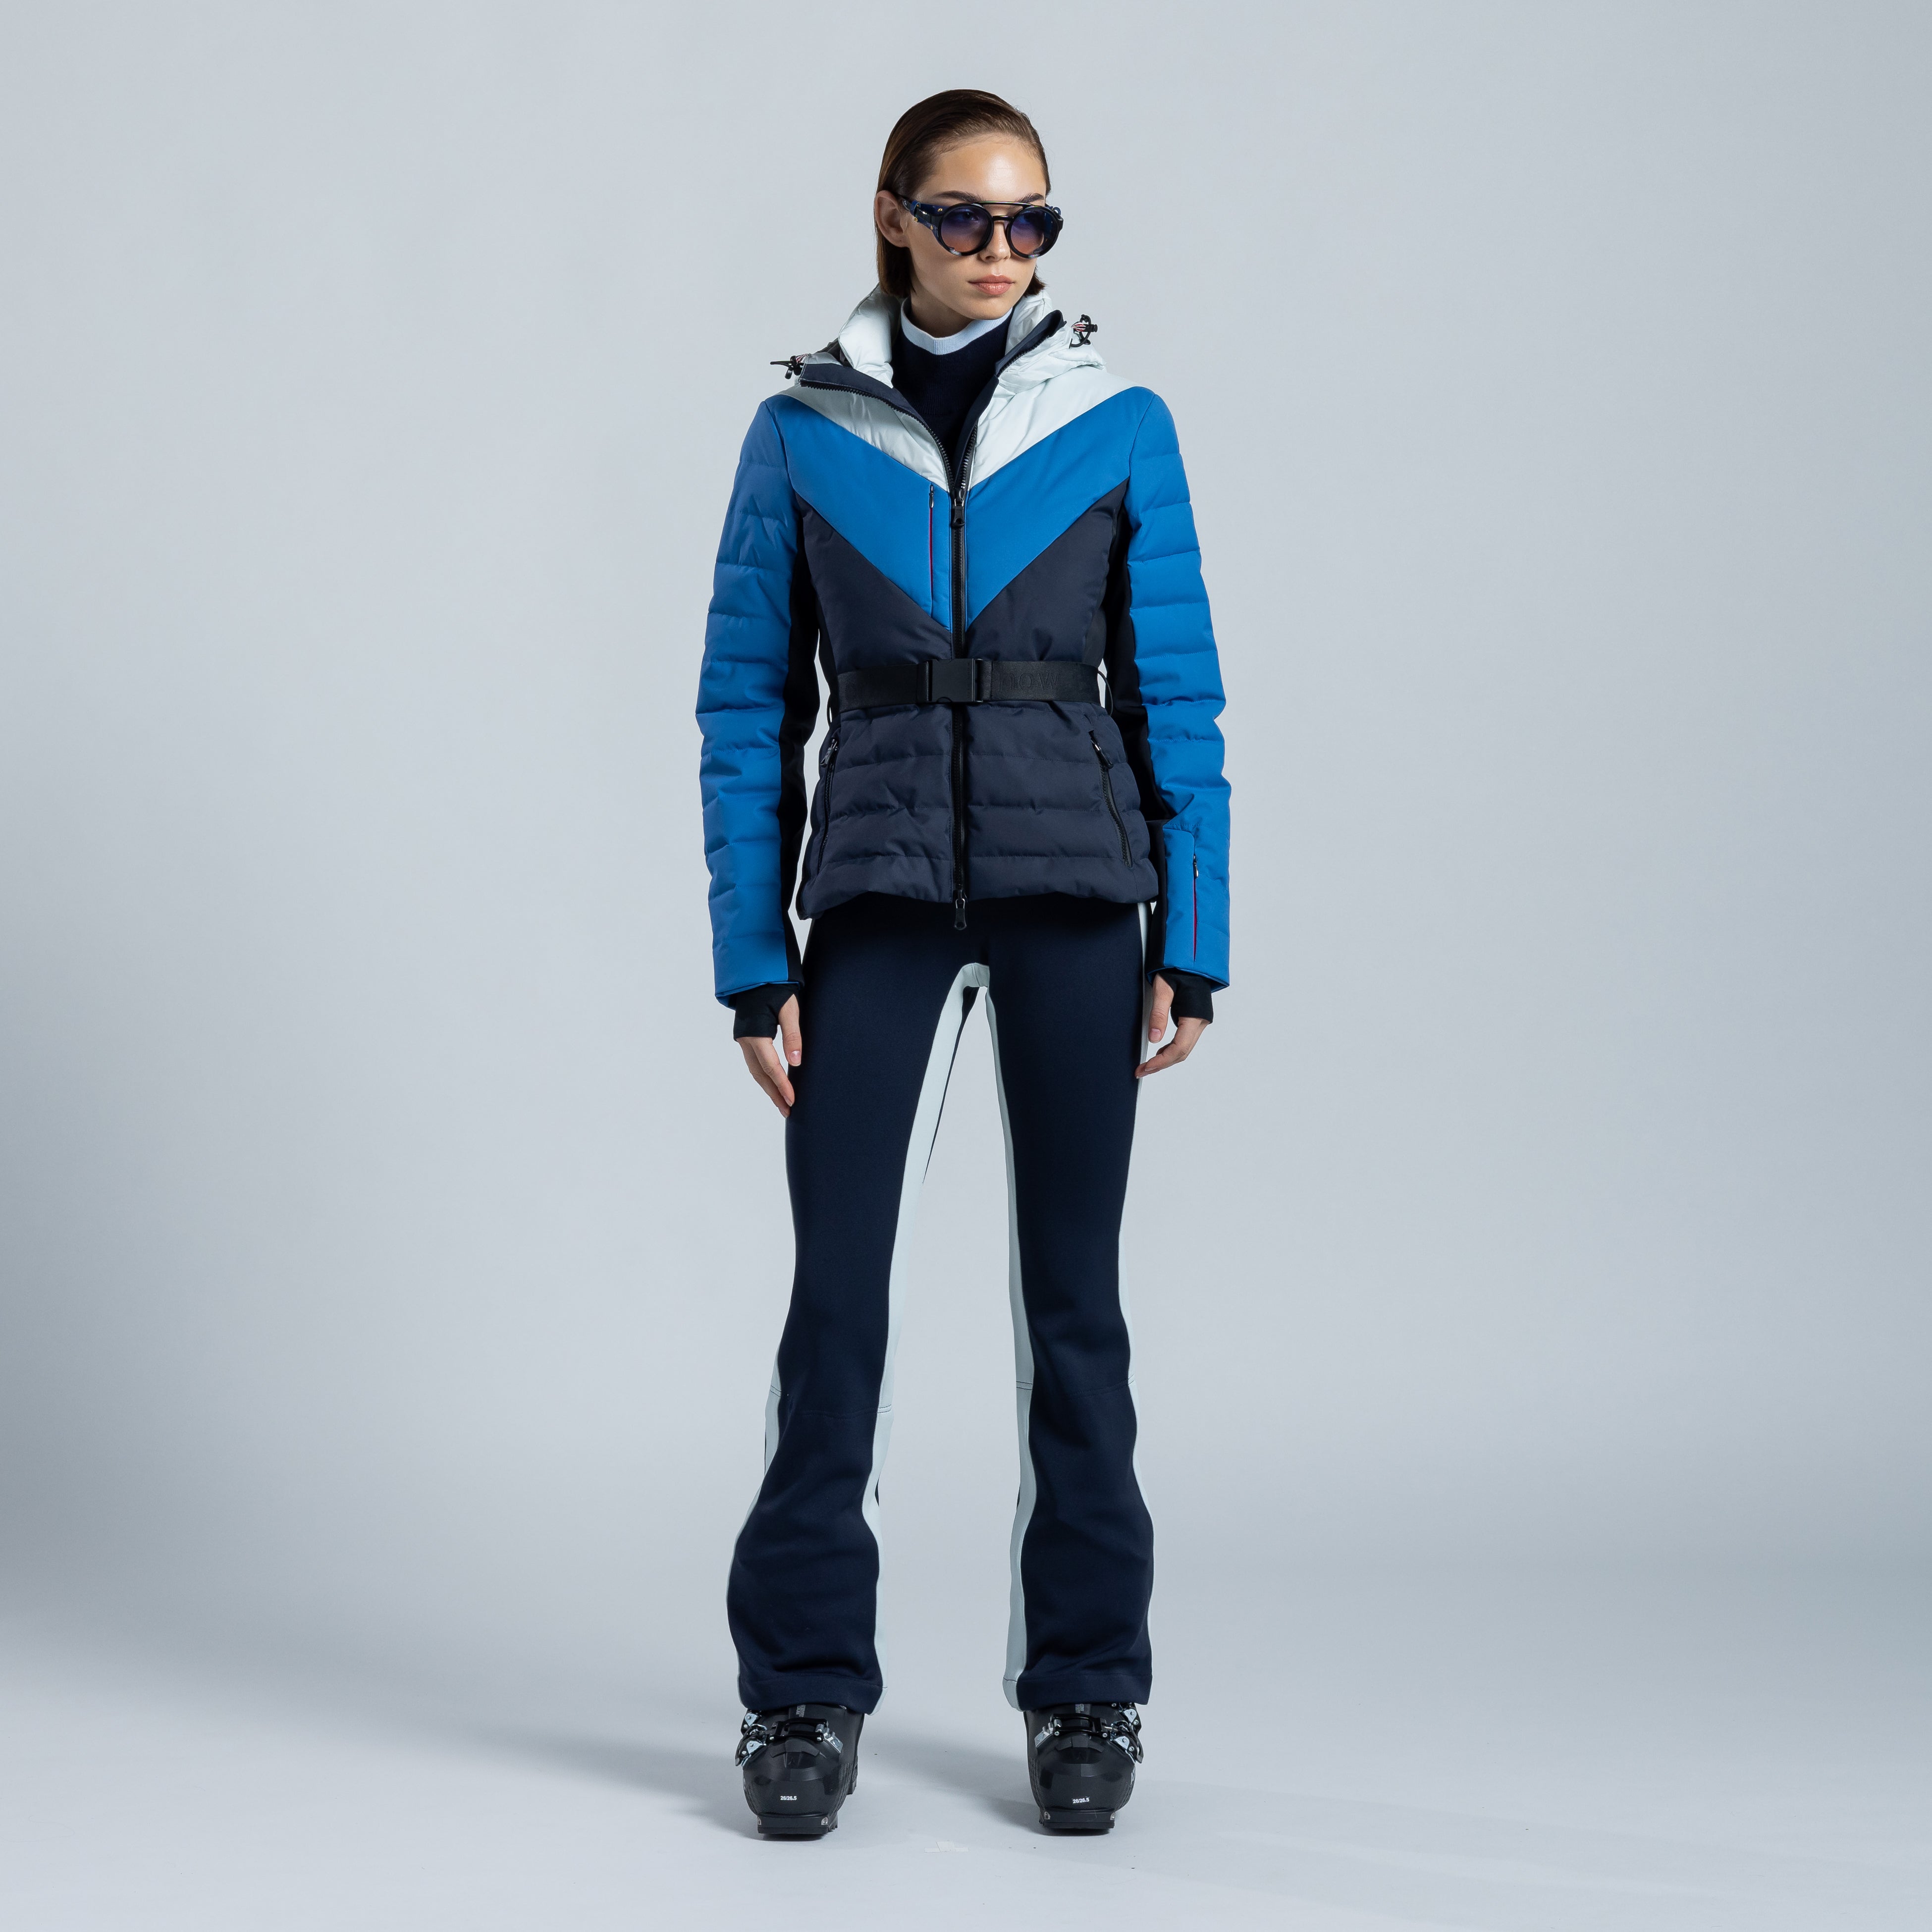 NWT!! Obermeyer Women's Petite Tuscany II Ski Jacket Beret 4 Petite | eBay